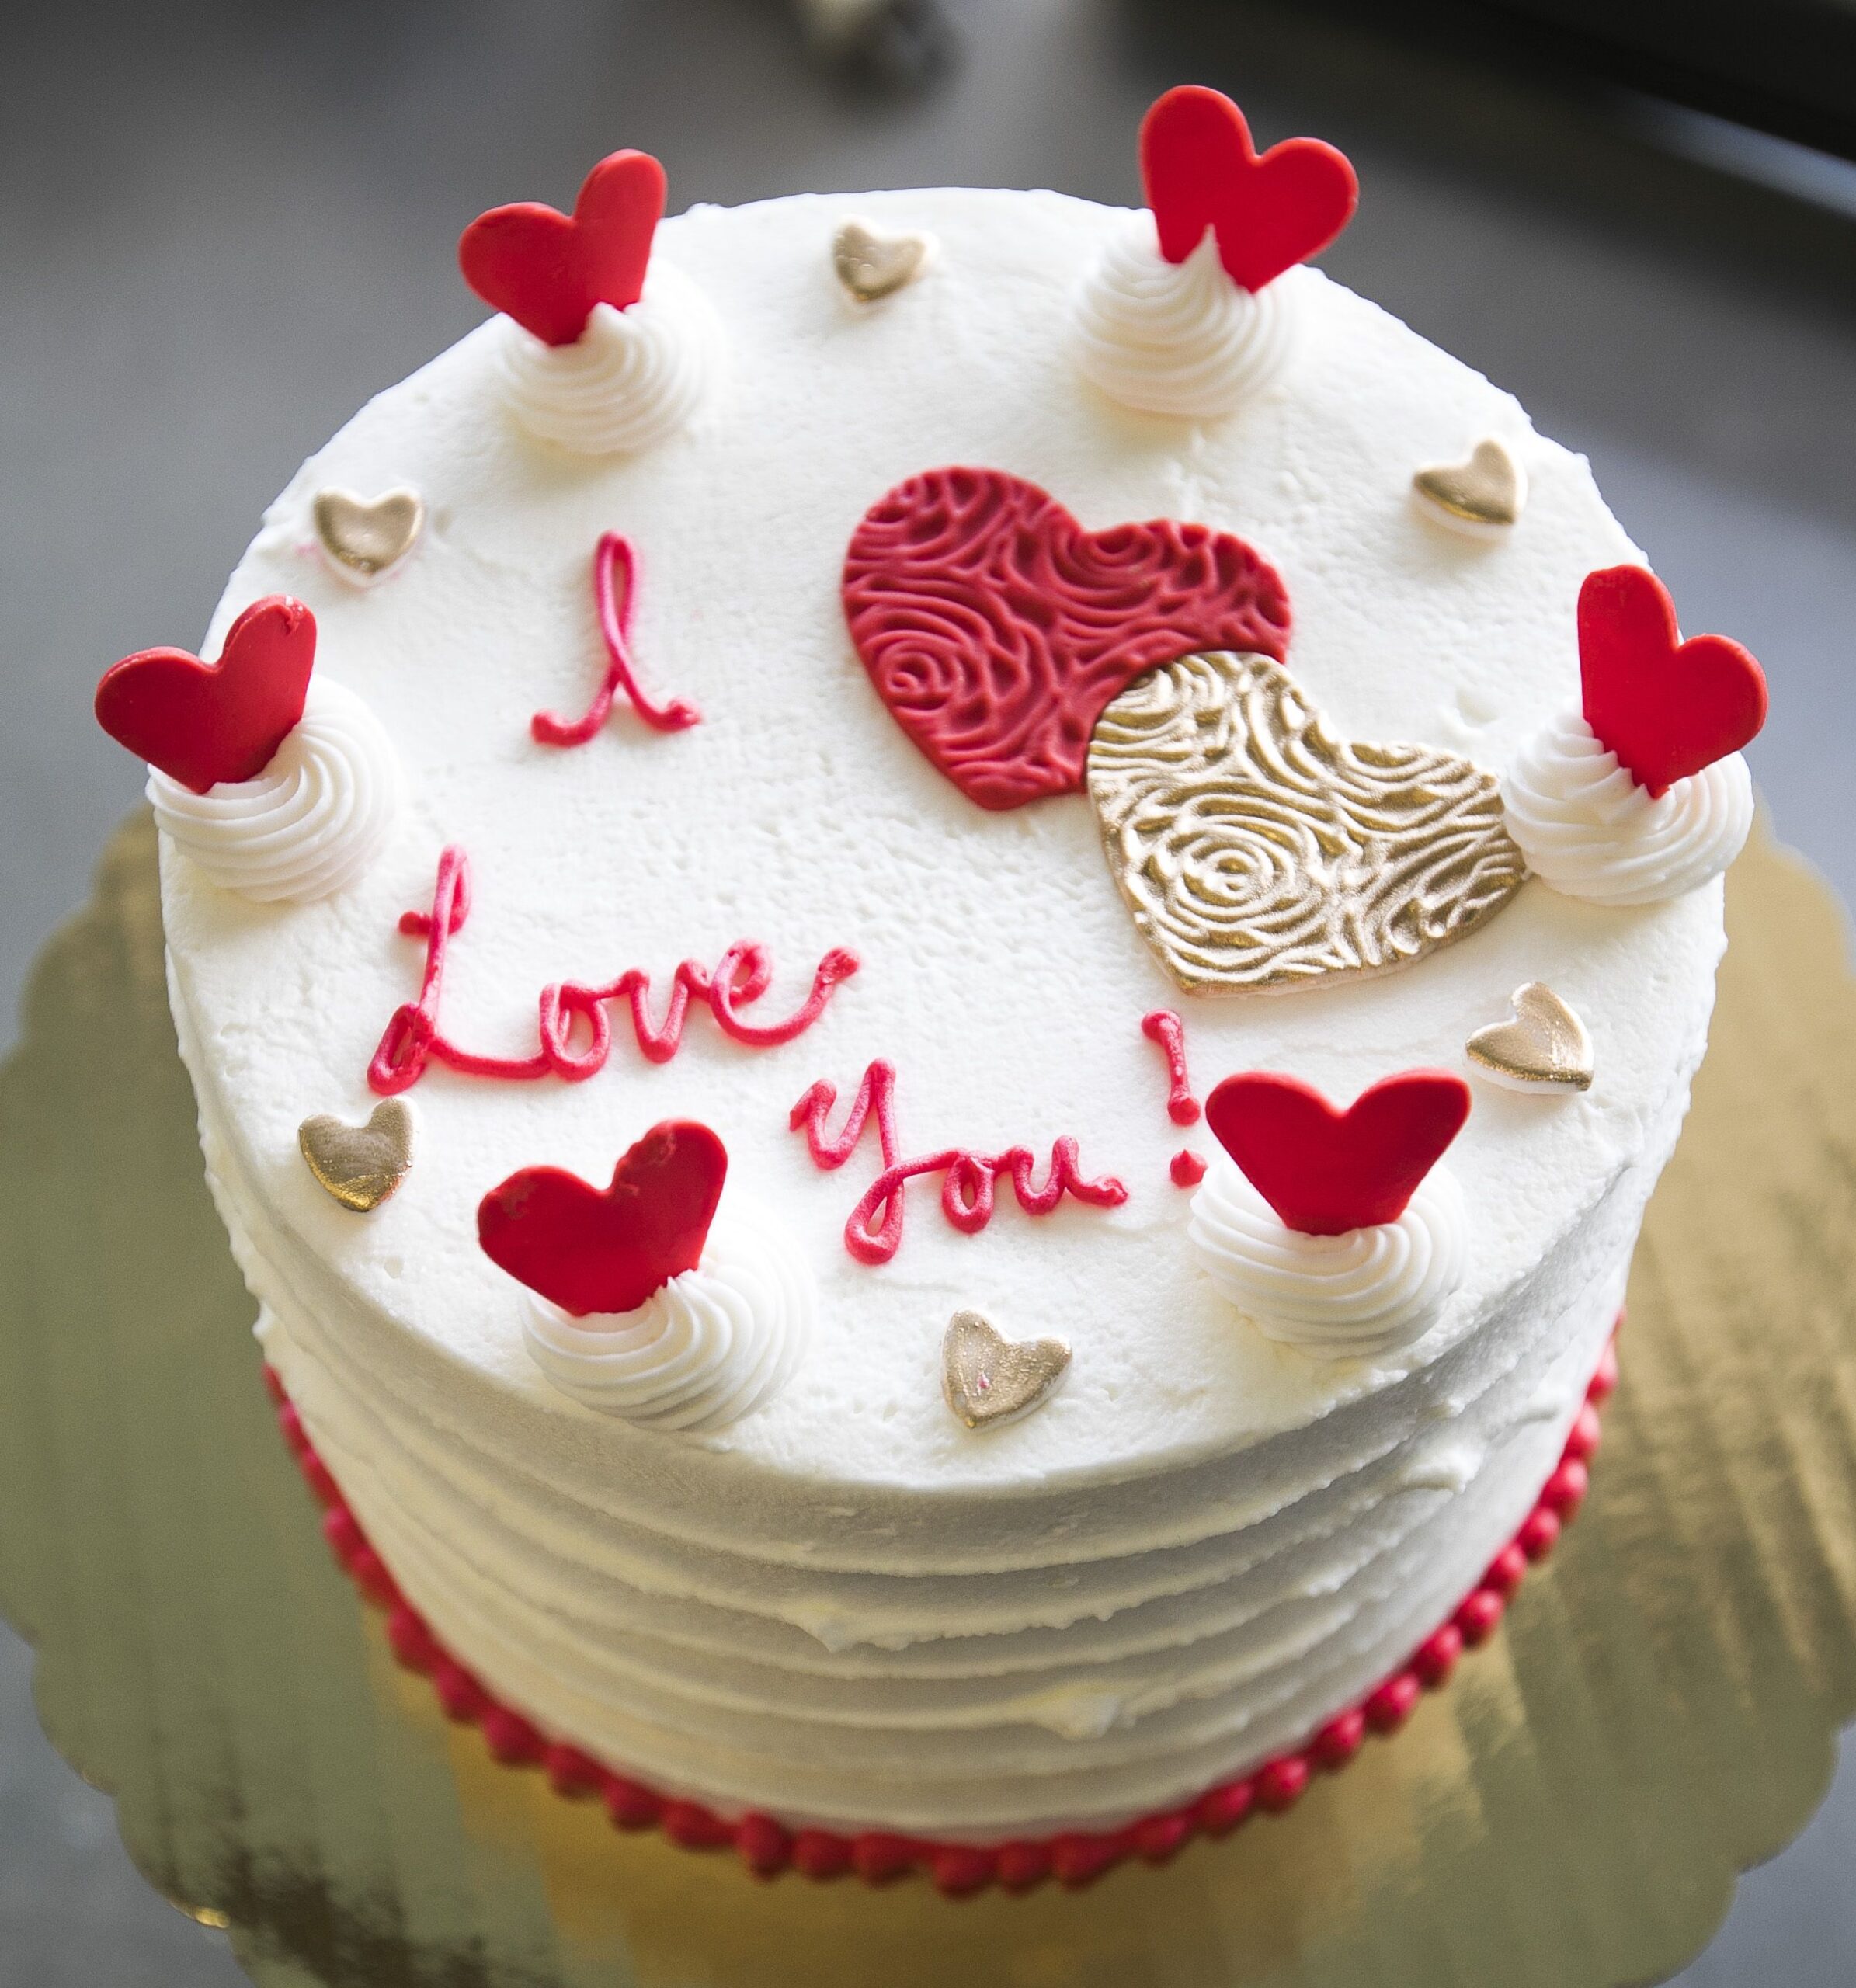 Valentine Special Couple Designer Cake - Avon Bakers